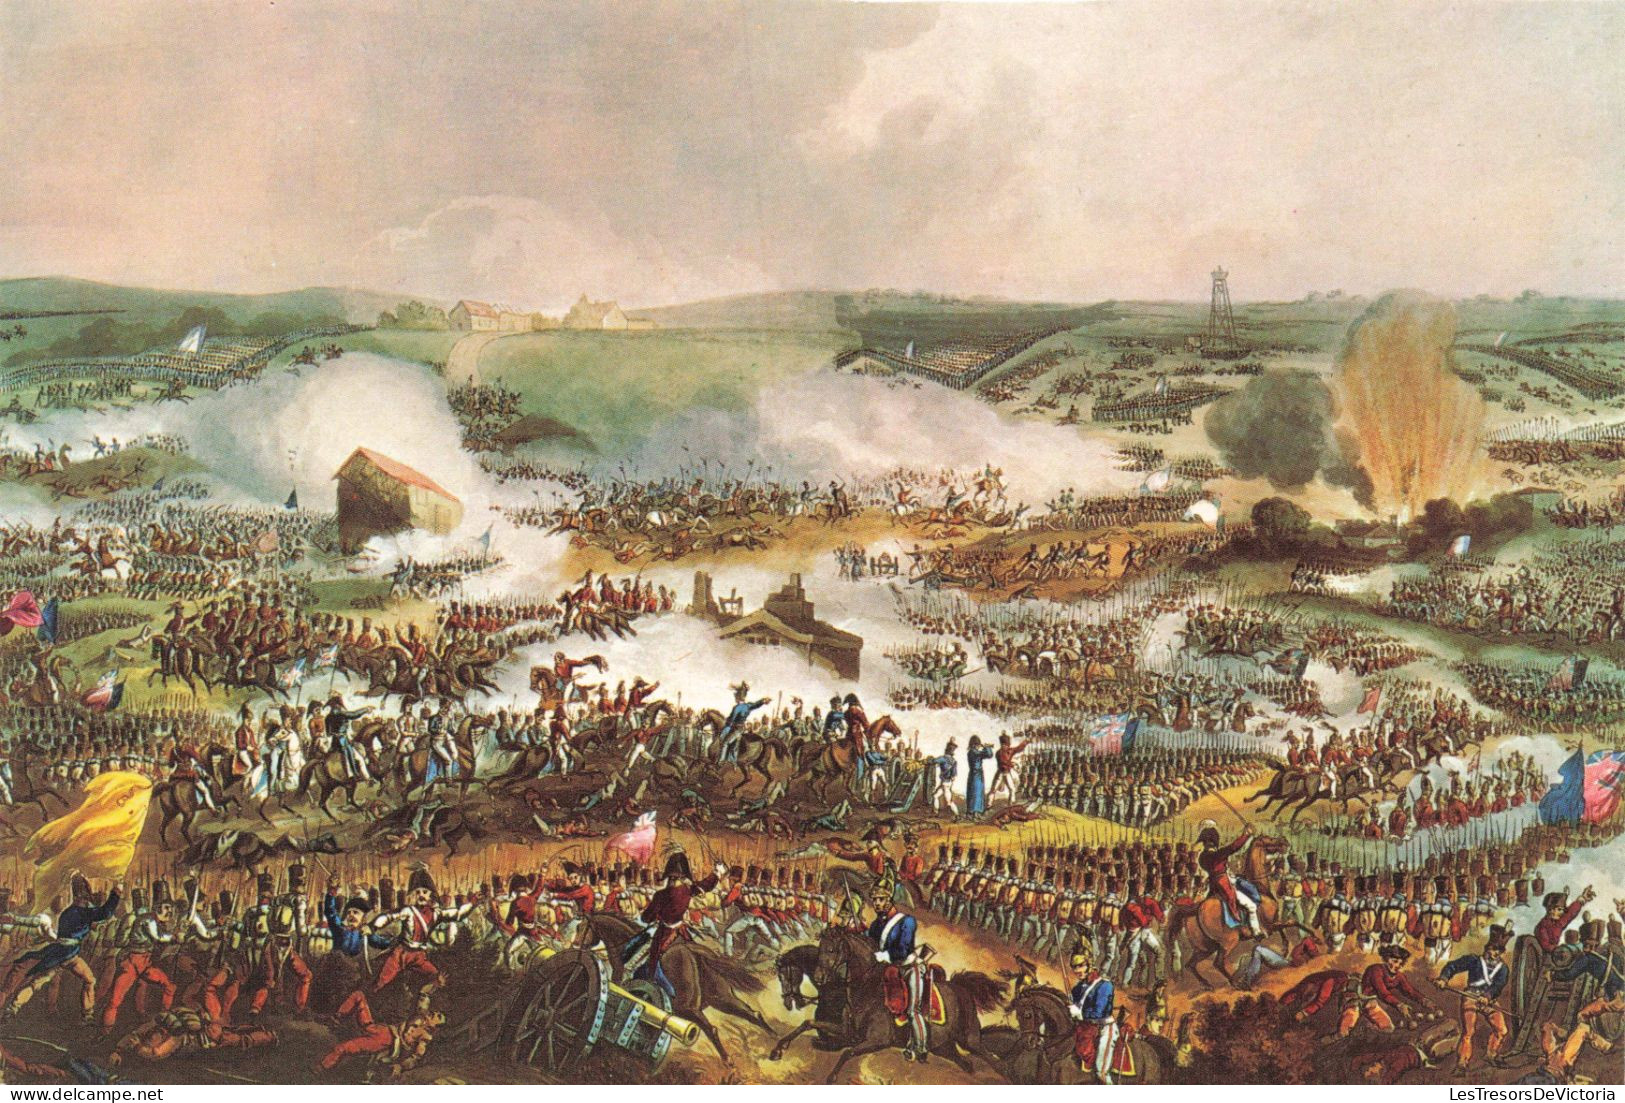 HISTOIRE - Waterloo - La Bataille De Waterloo - Carte Postale Ancienne - Histoire